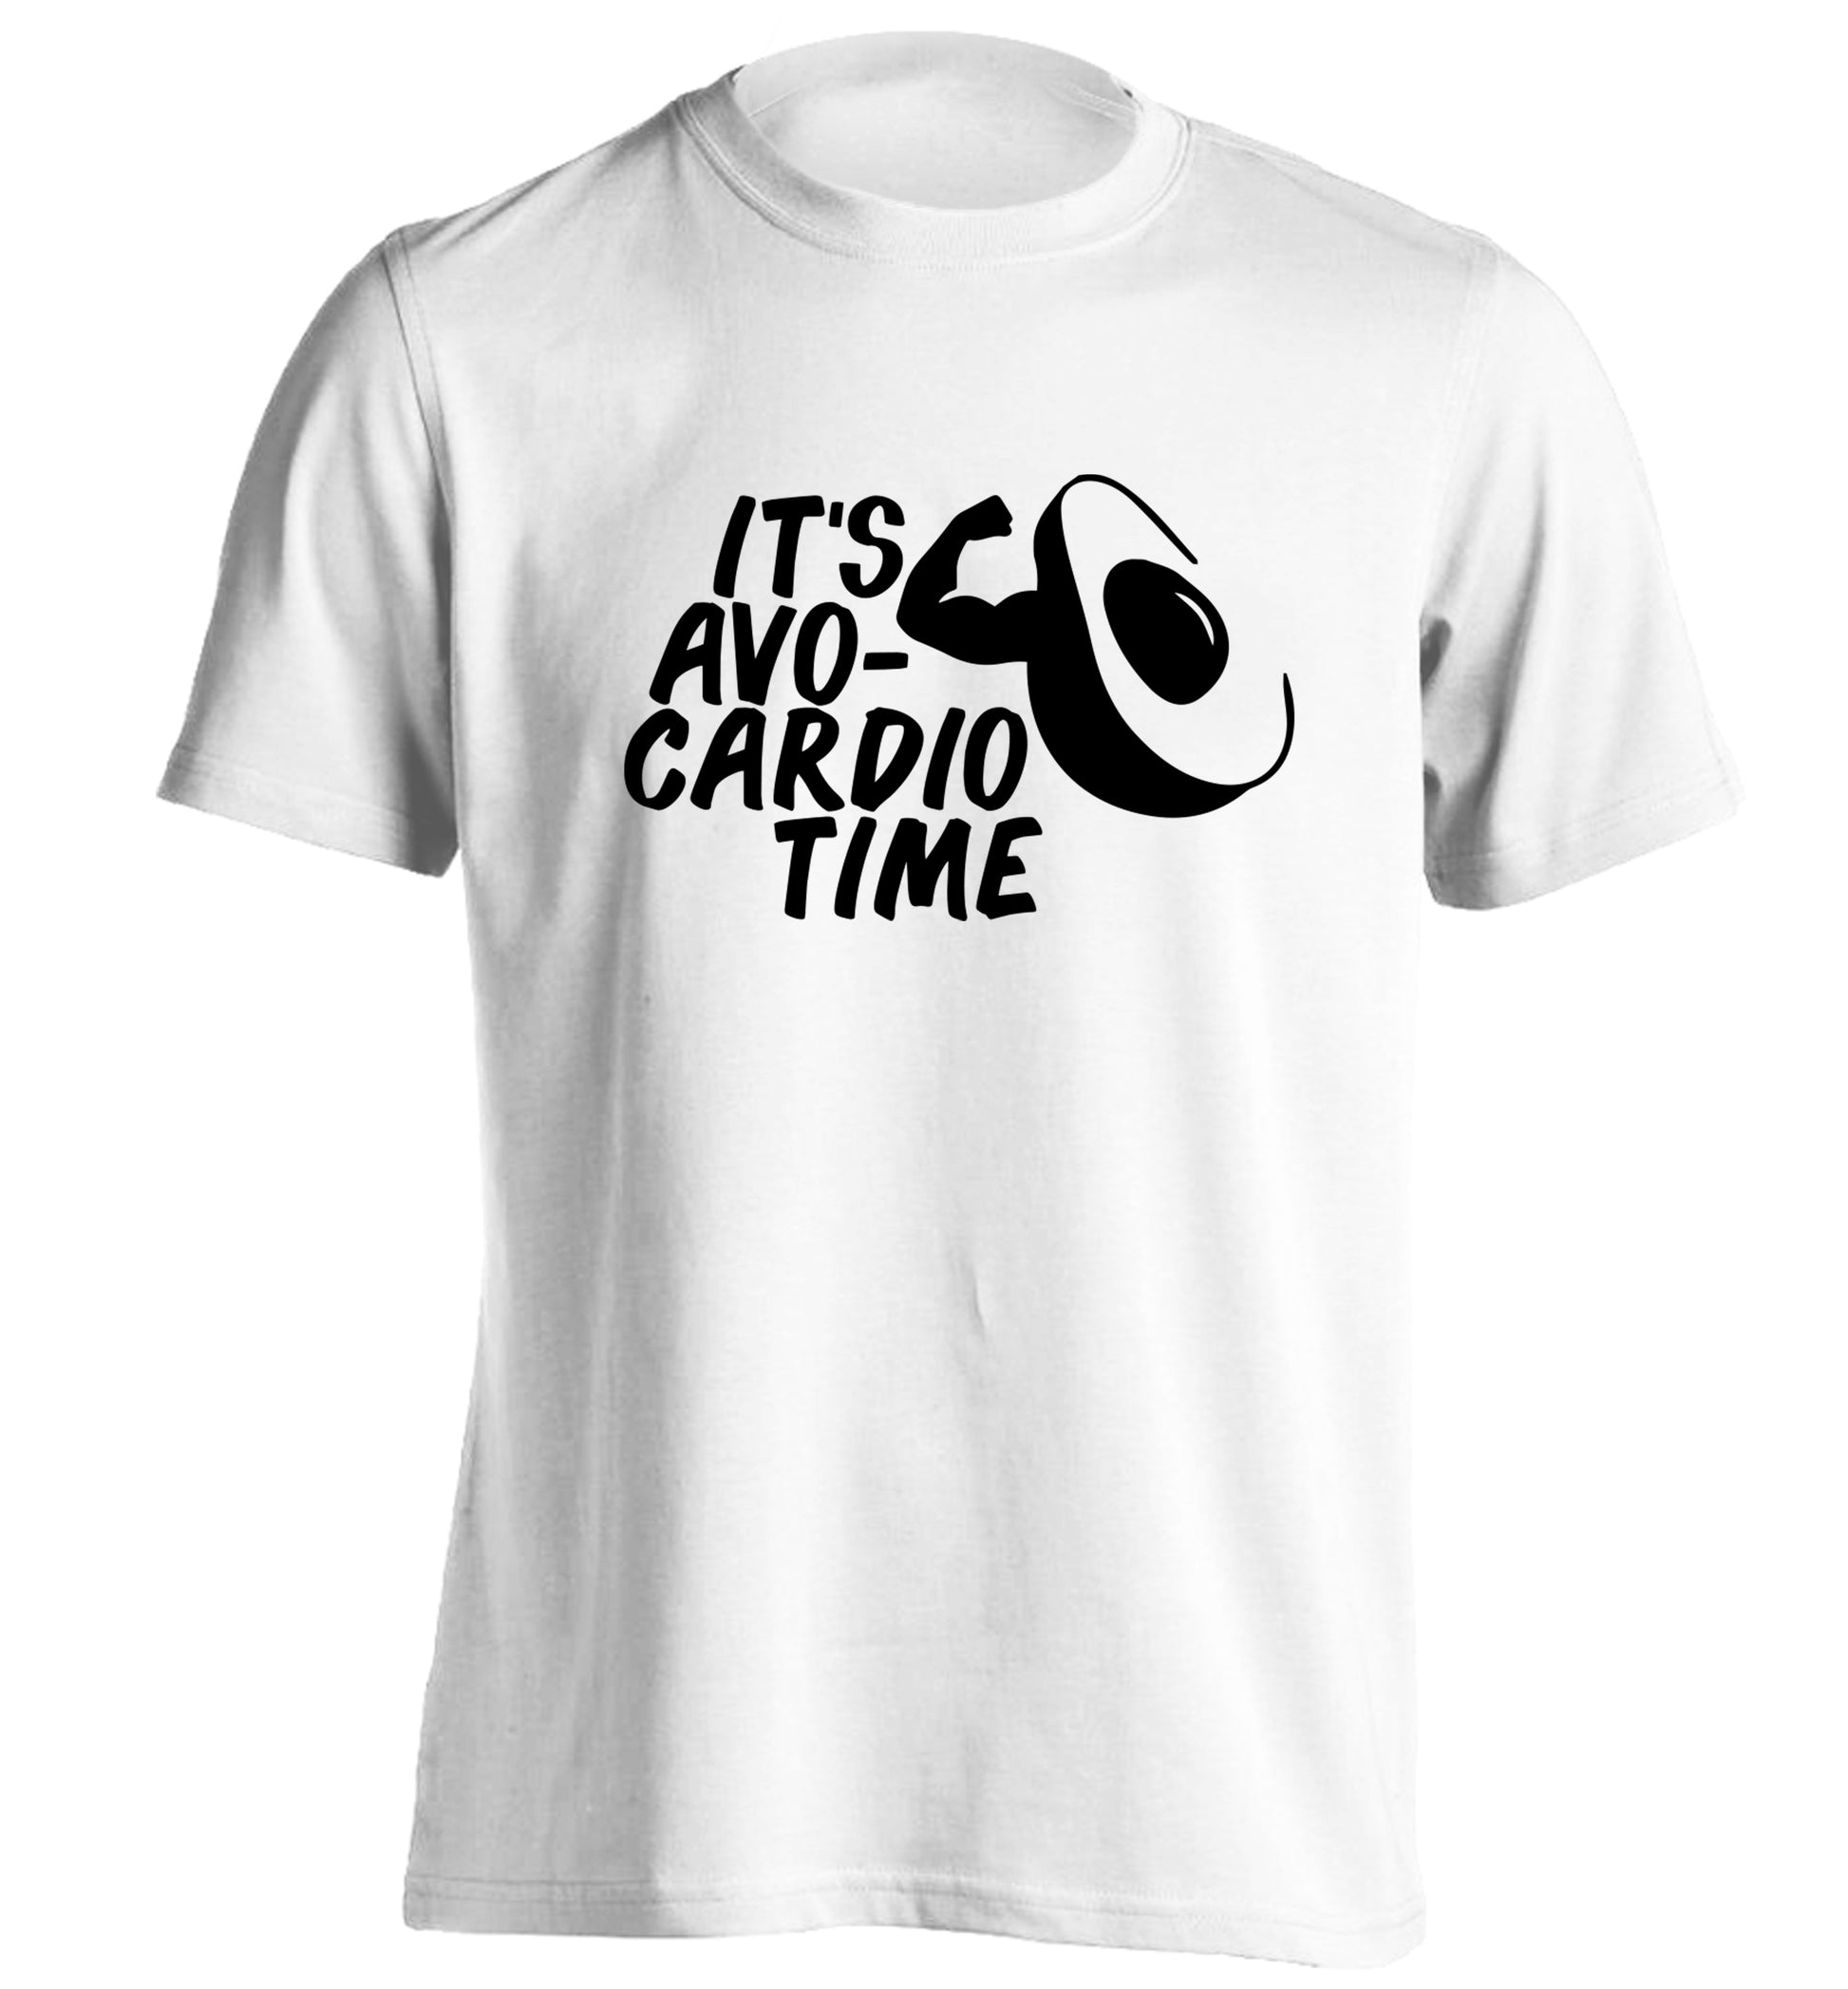 It's avo-cardio time adults unisex white Tshirt 2XL